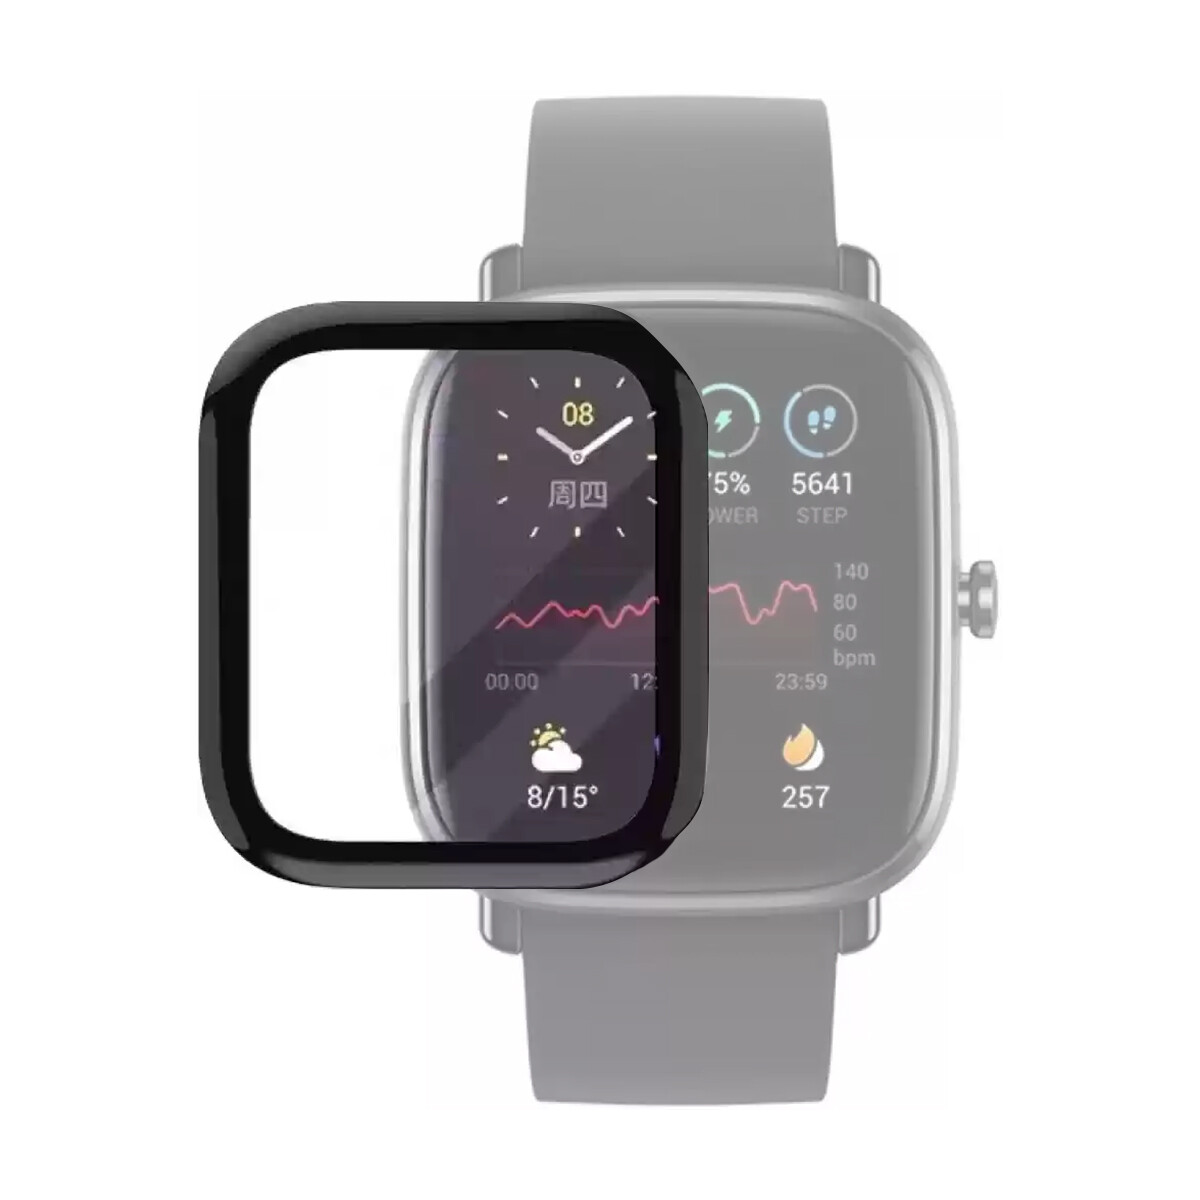 Protector de Pantalla Vidrio PMMA para Smartwatch Amazfit GTS 2 Mini - Transparente 